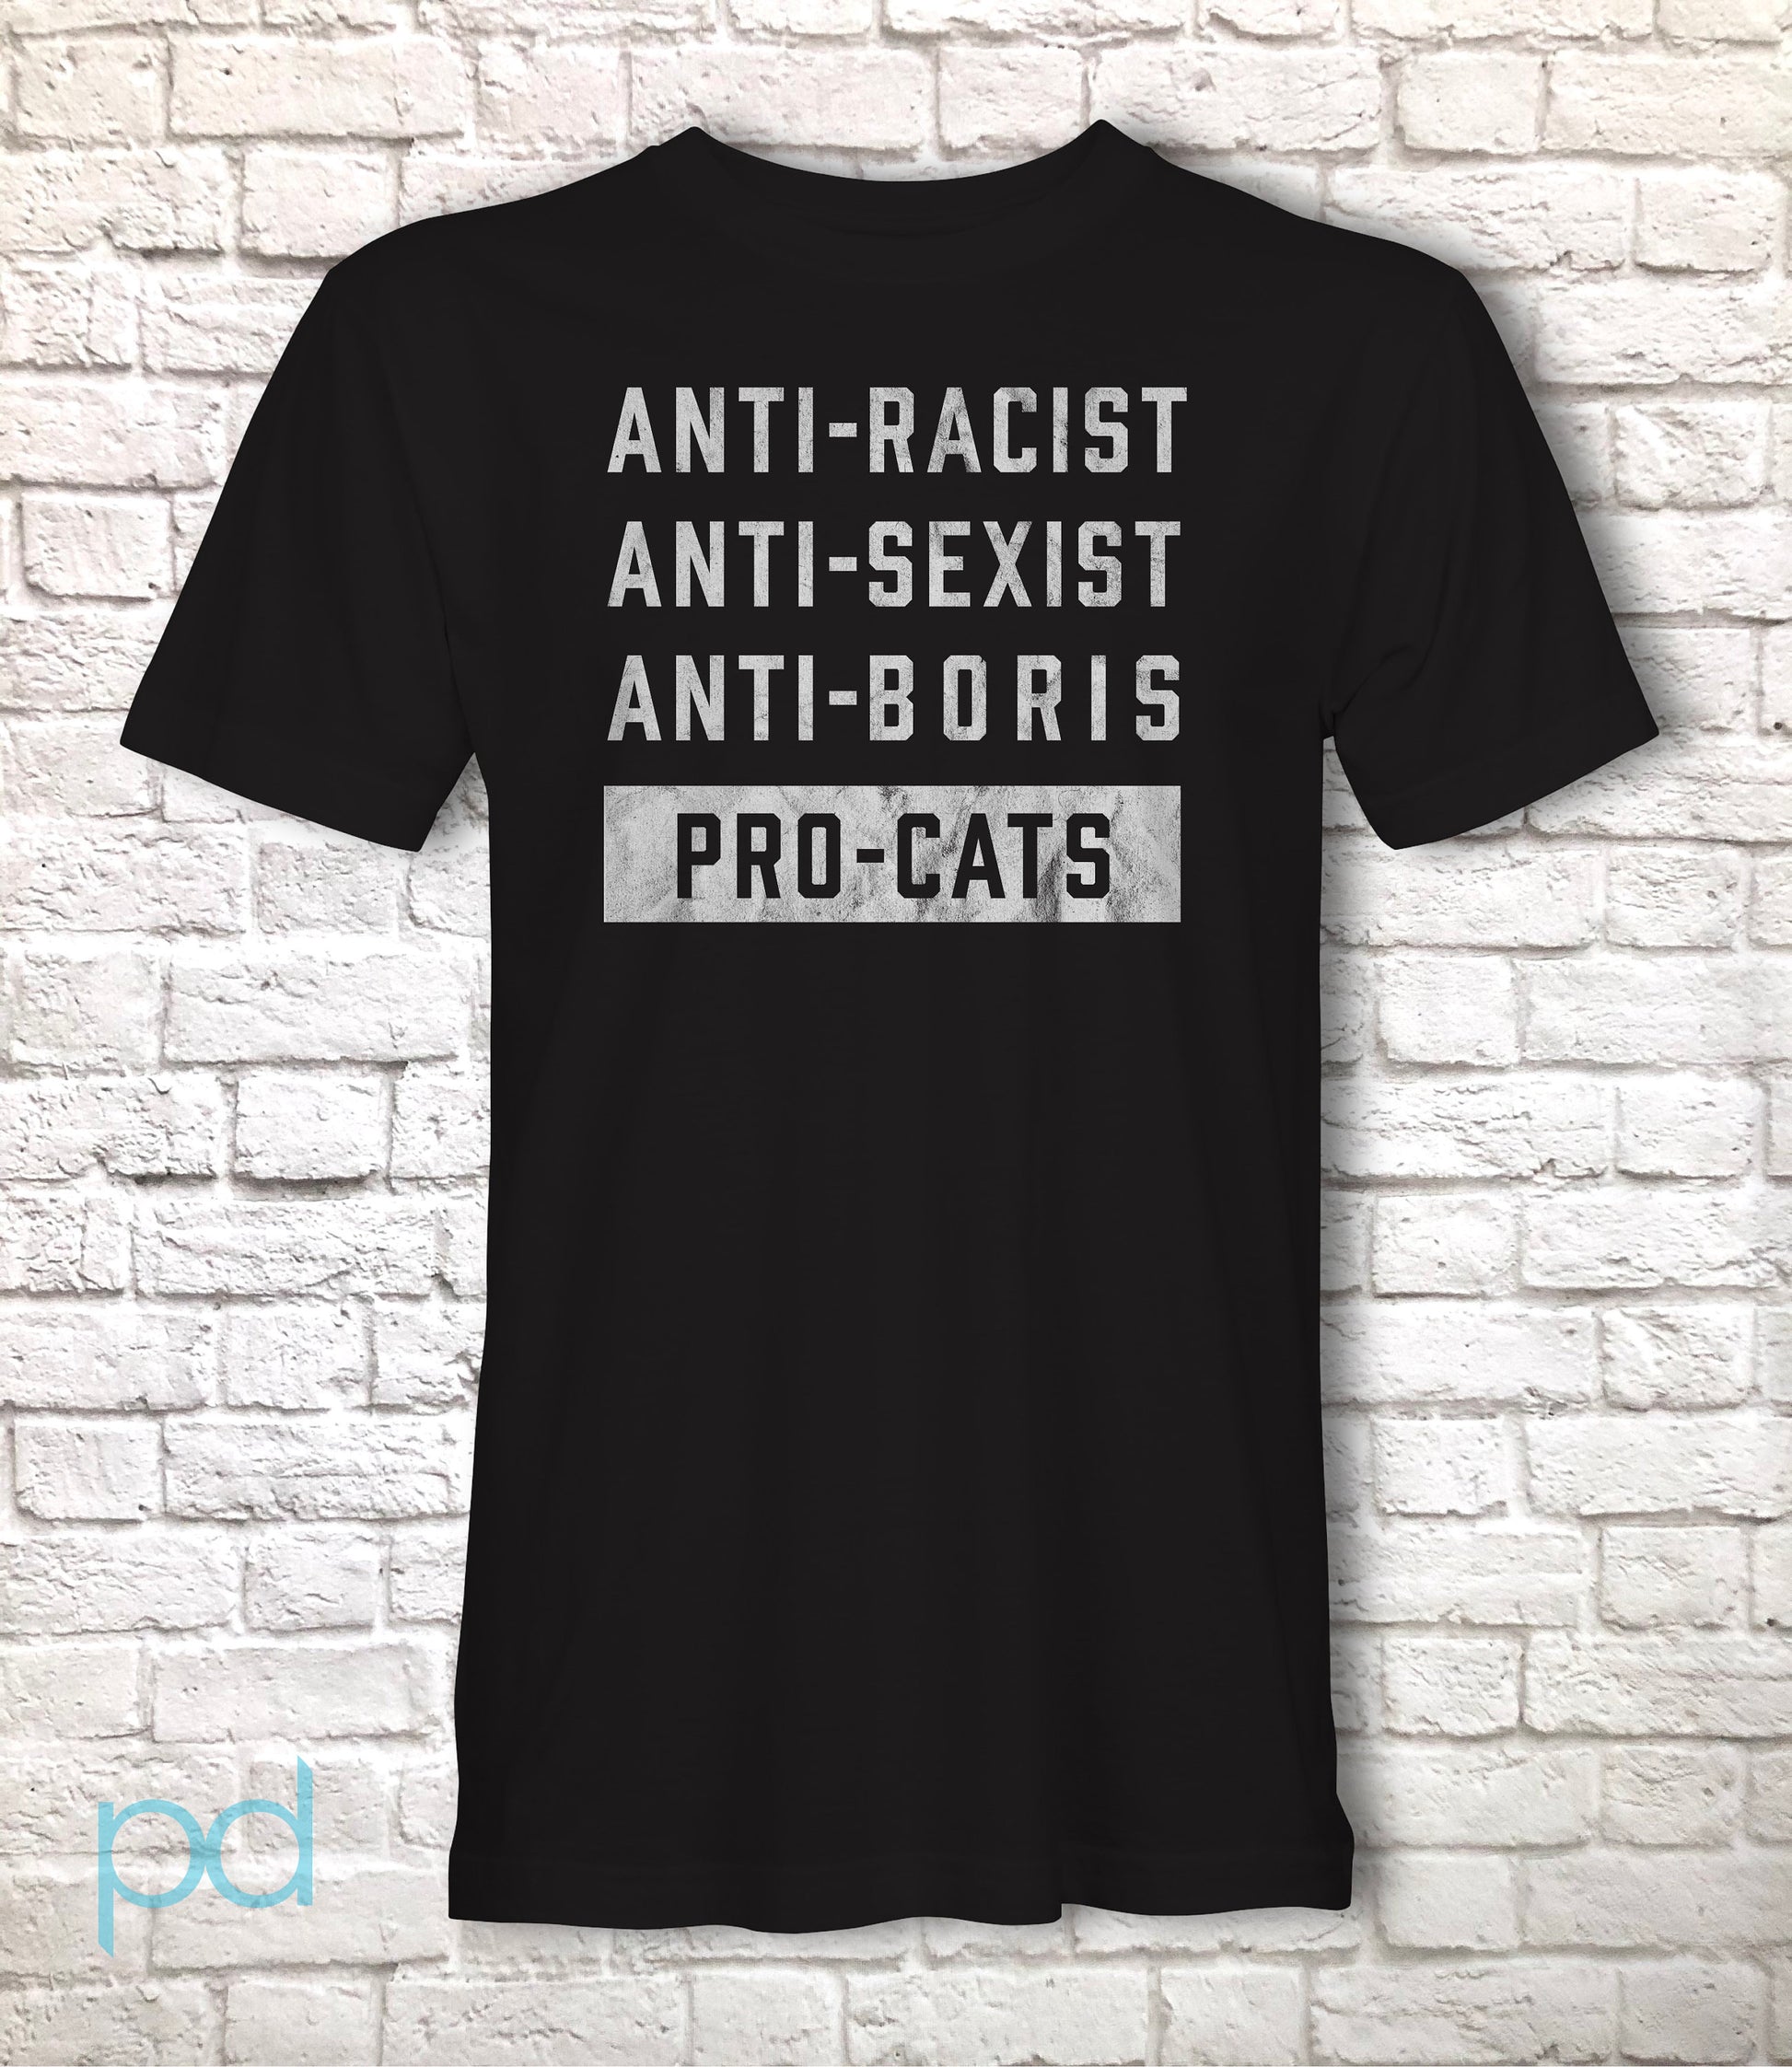 Anti-Boris T-Shirt, Cat Lover Johnson Tory Failure Tee Shirt, Tories & Conservative Epic Fail, Unisex Short Sleeve Graphic Print Top